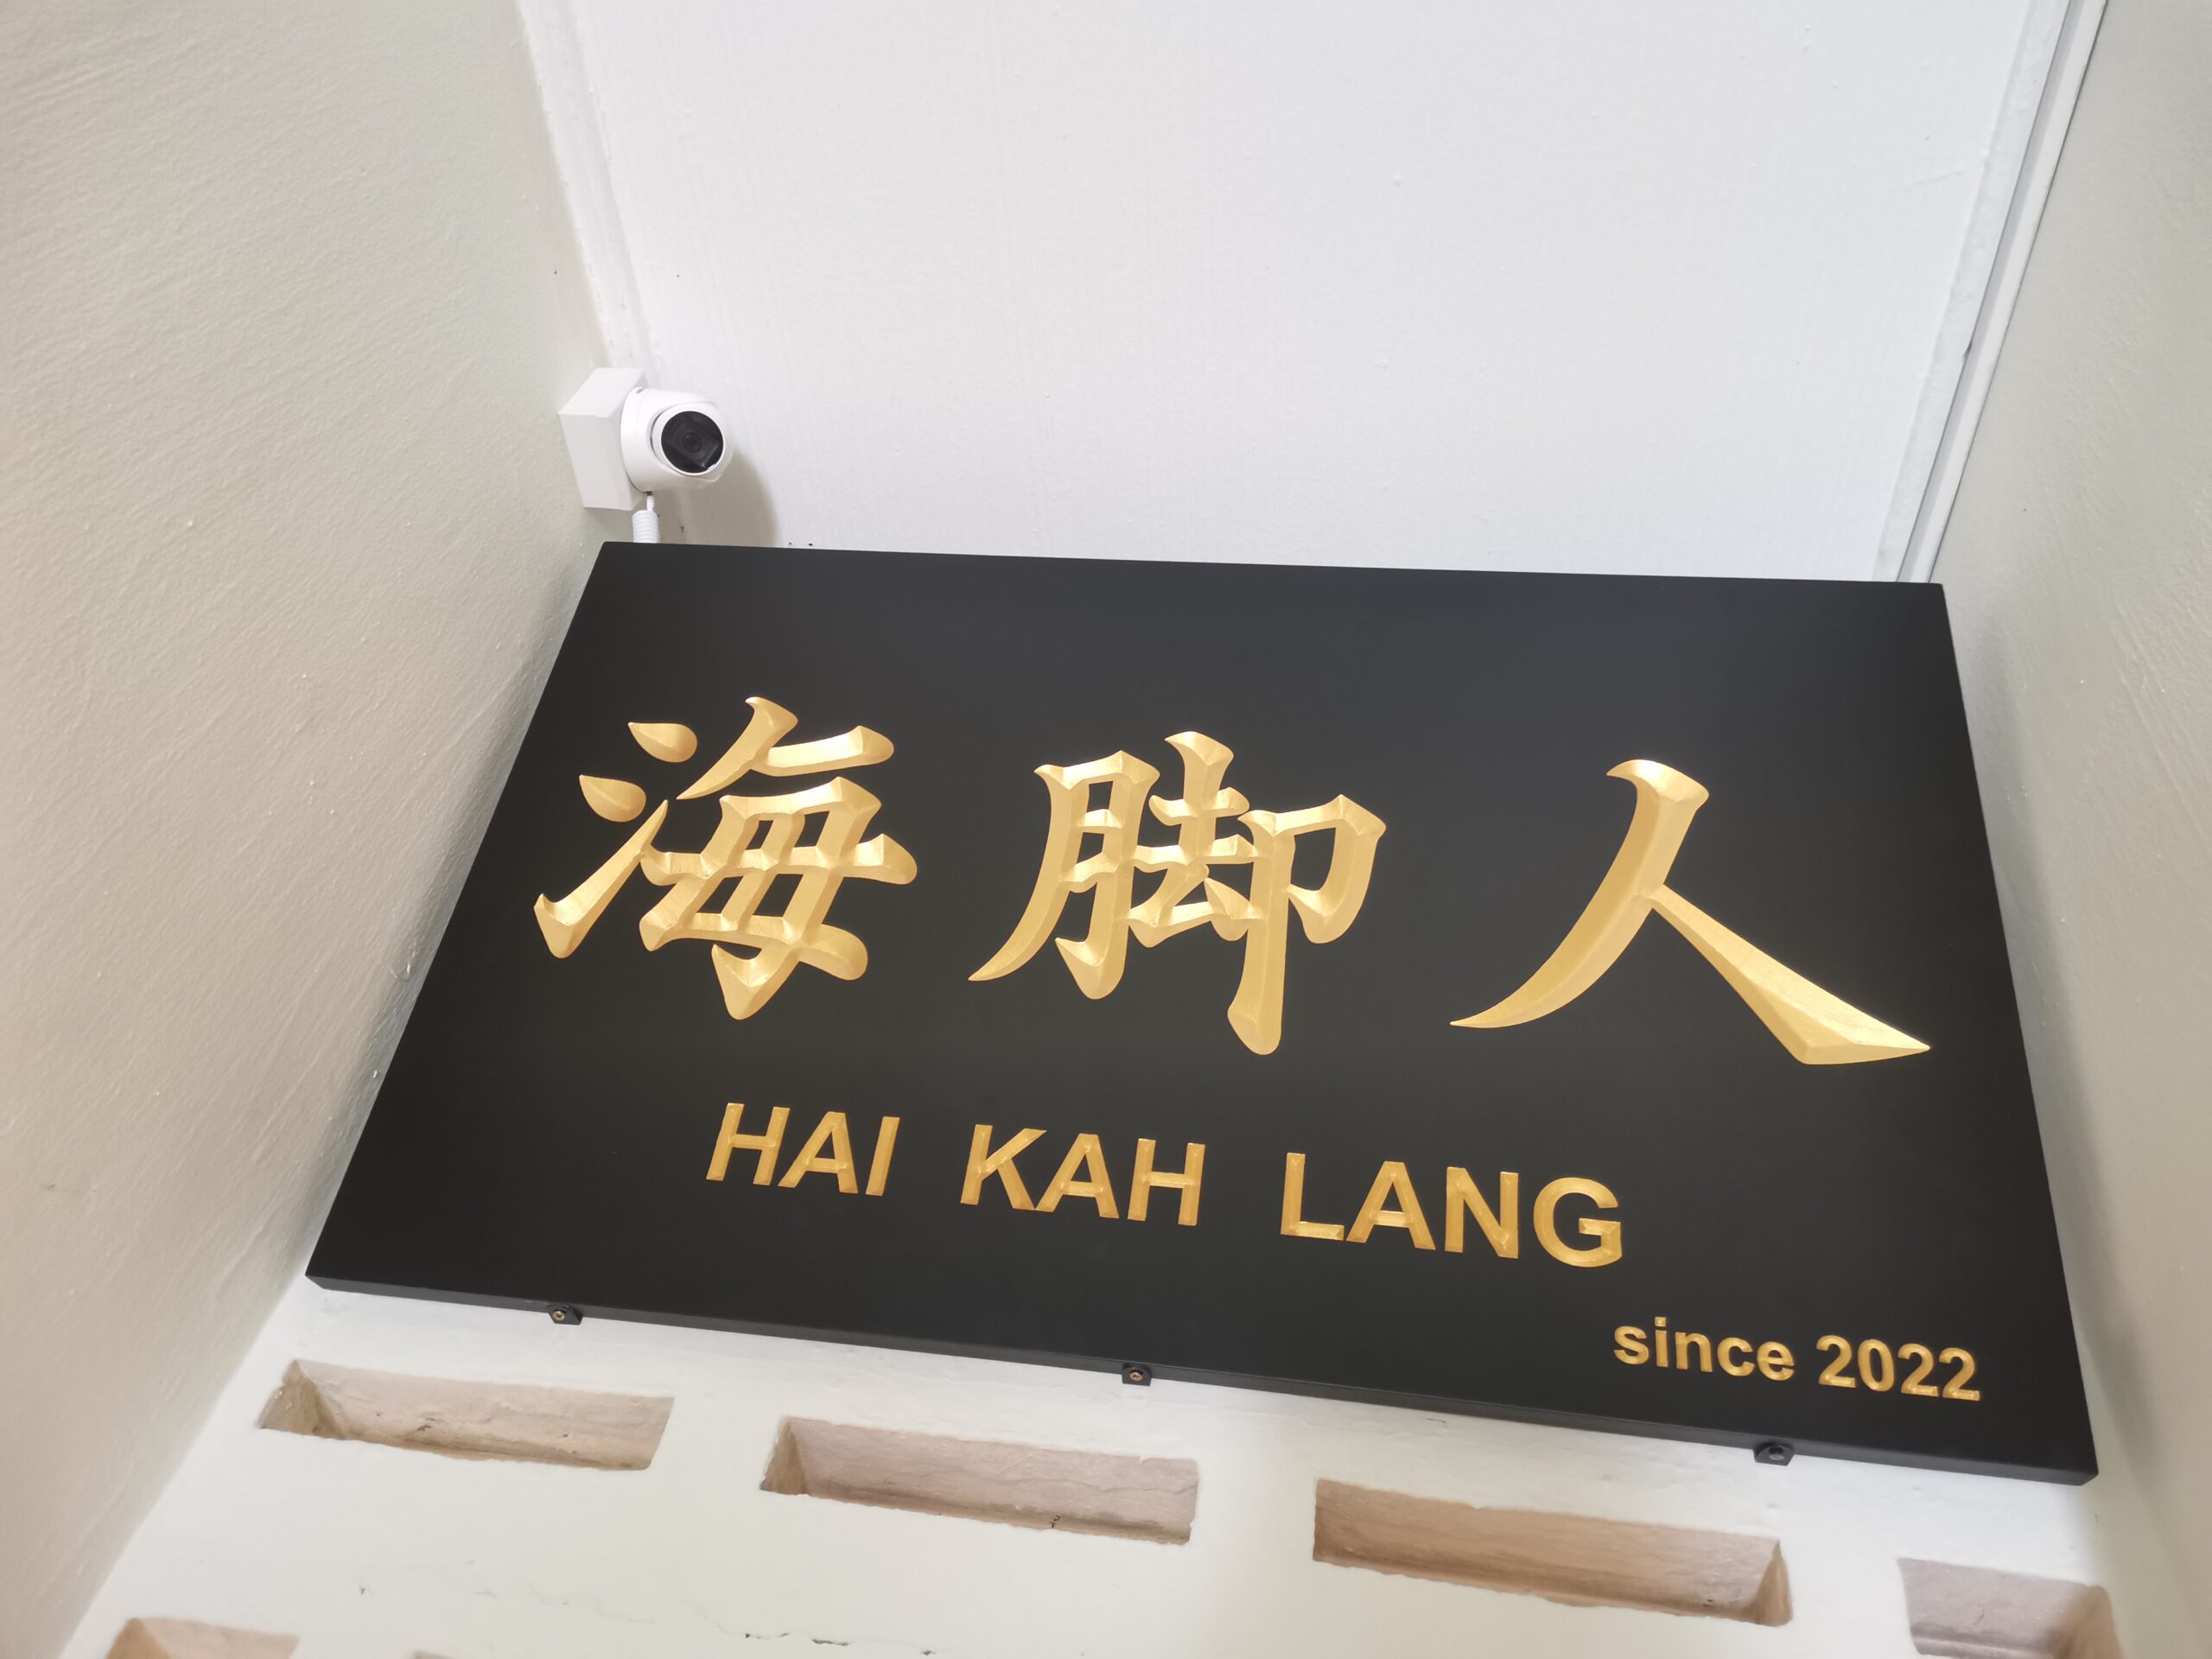 Hai kai lang new signboard